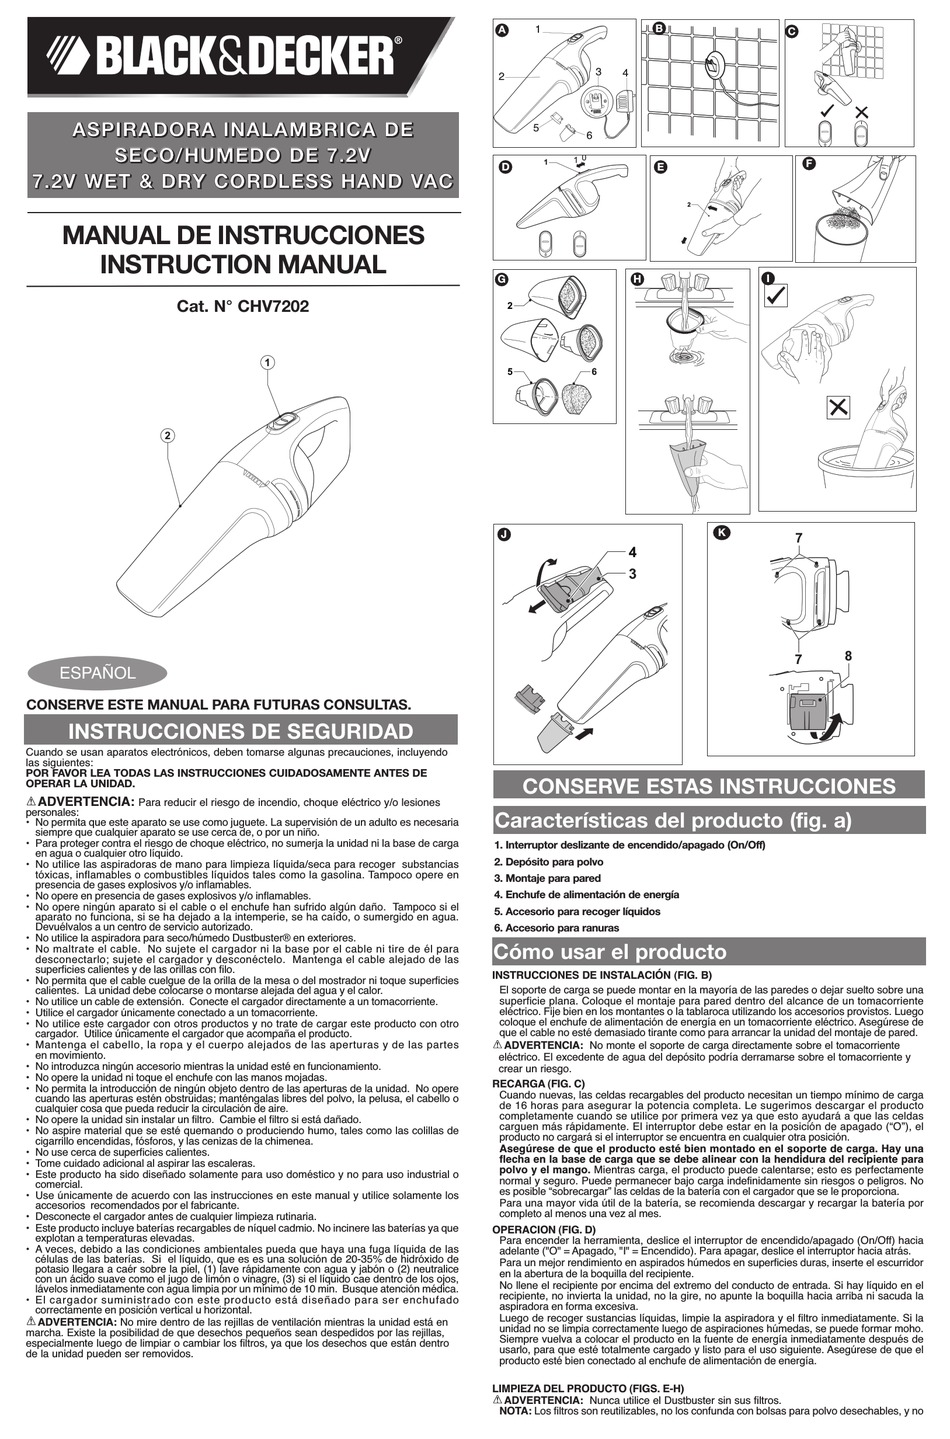 User manual Black & Decker KA2000 (English - 72 pages)